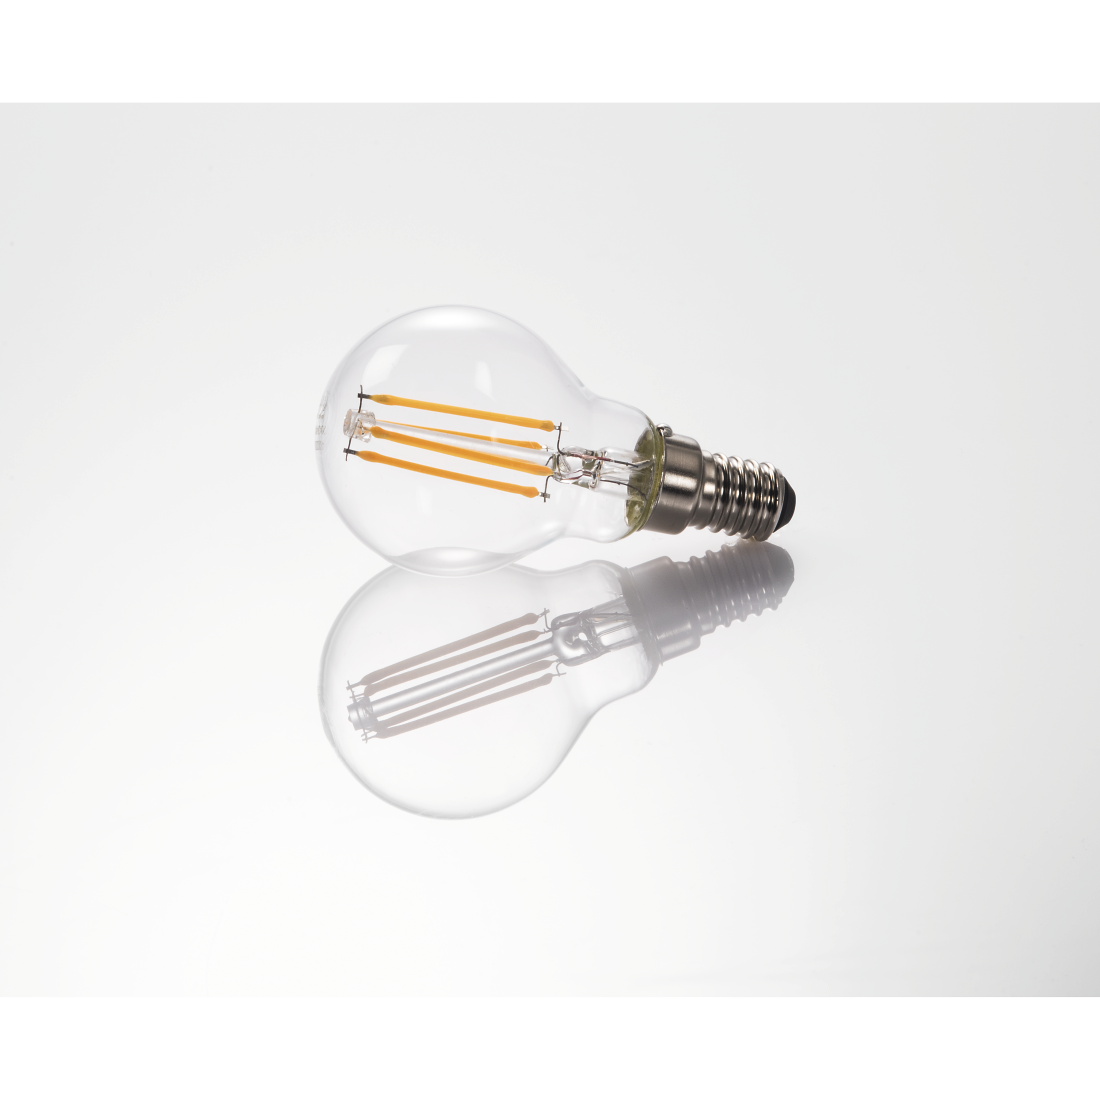 abx3 Druckfähige Abbildung 3 - Xavax, LED-Filament, E14, 470lm ersetzt 40W, Tropfenlampe, Warmweiß, dimmbar